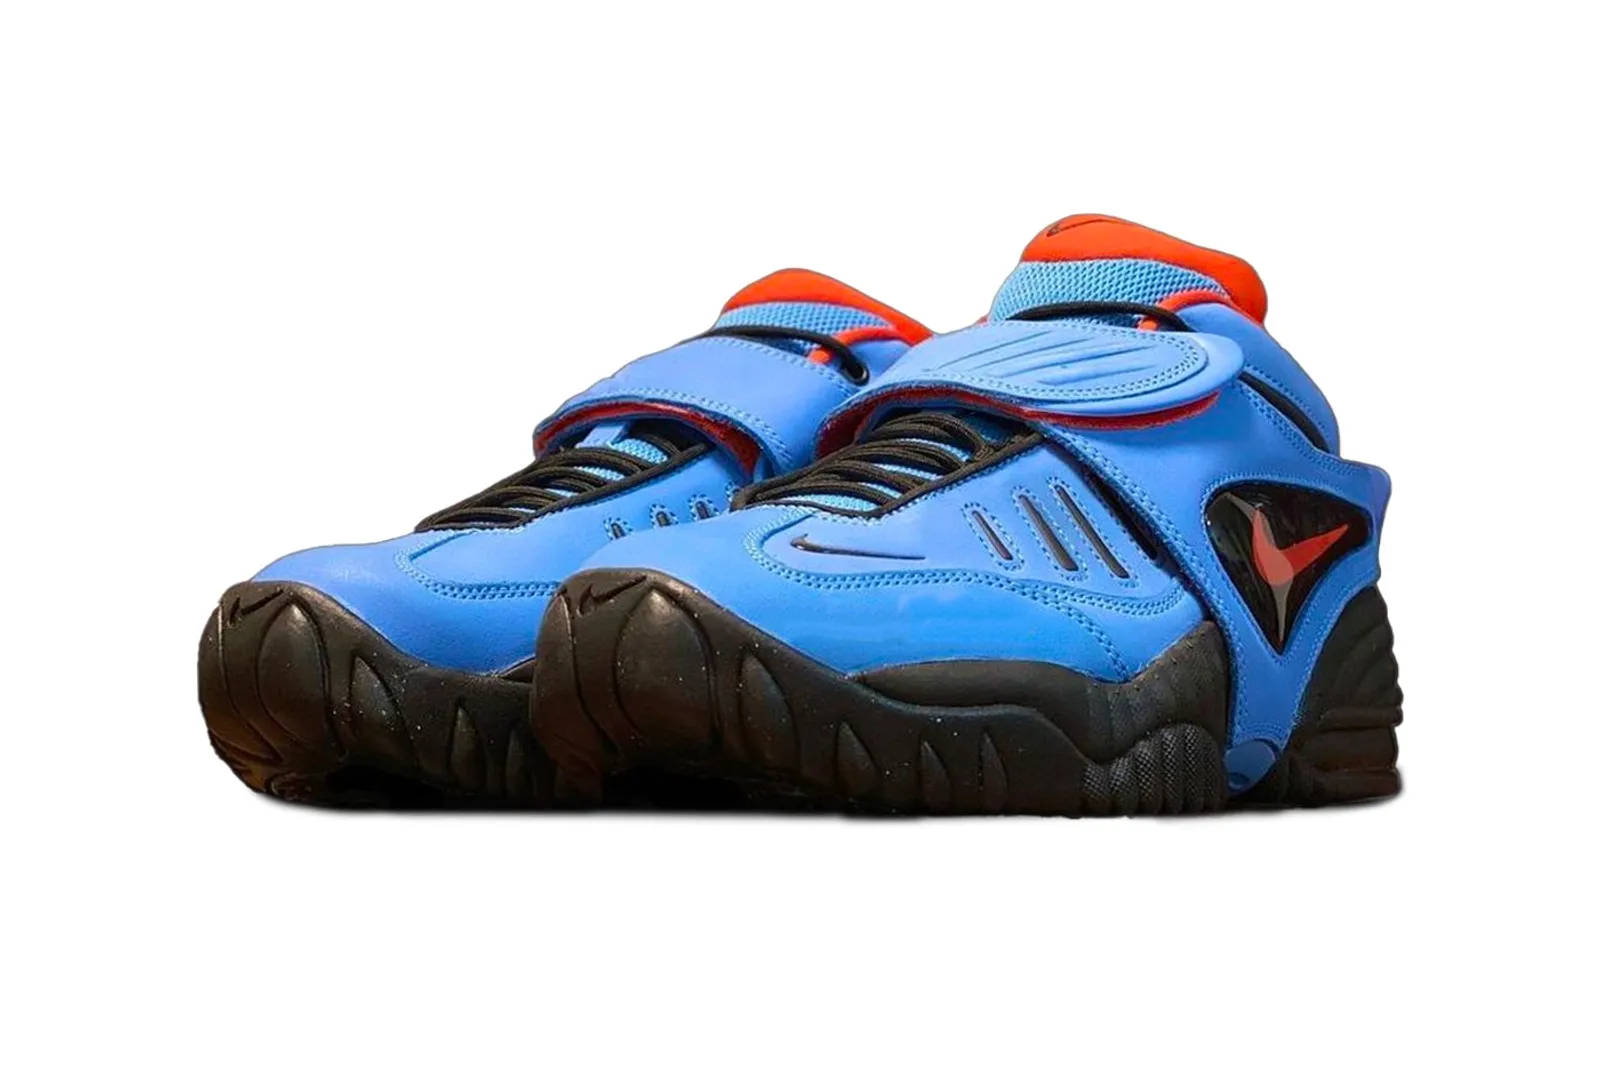 Sneaker AMBUSH® x Nike Rilis Warna Baru 'Blue' dan 'Orange'